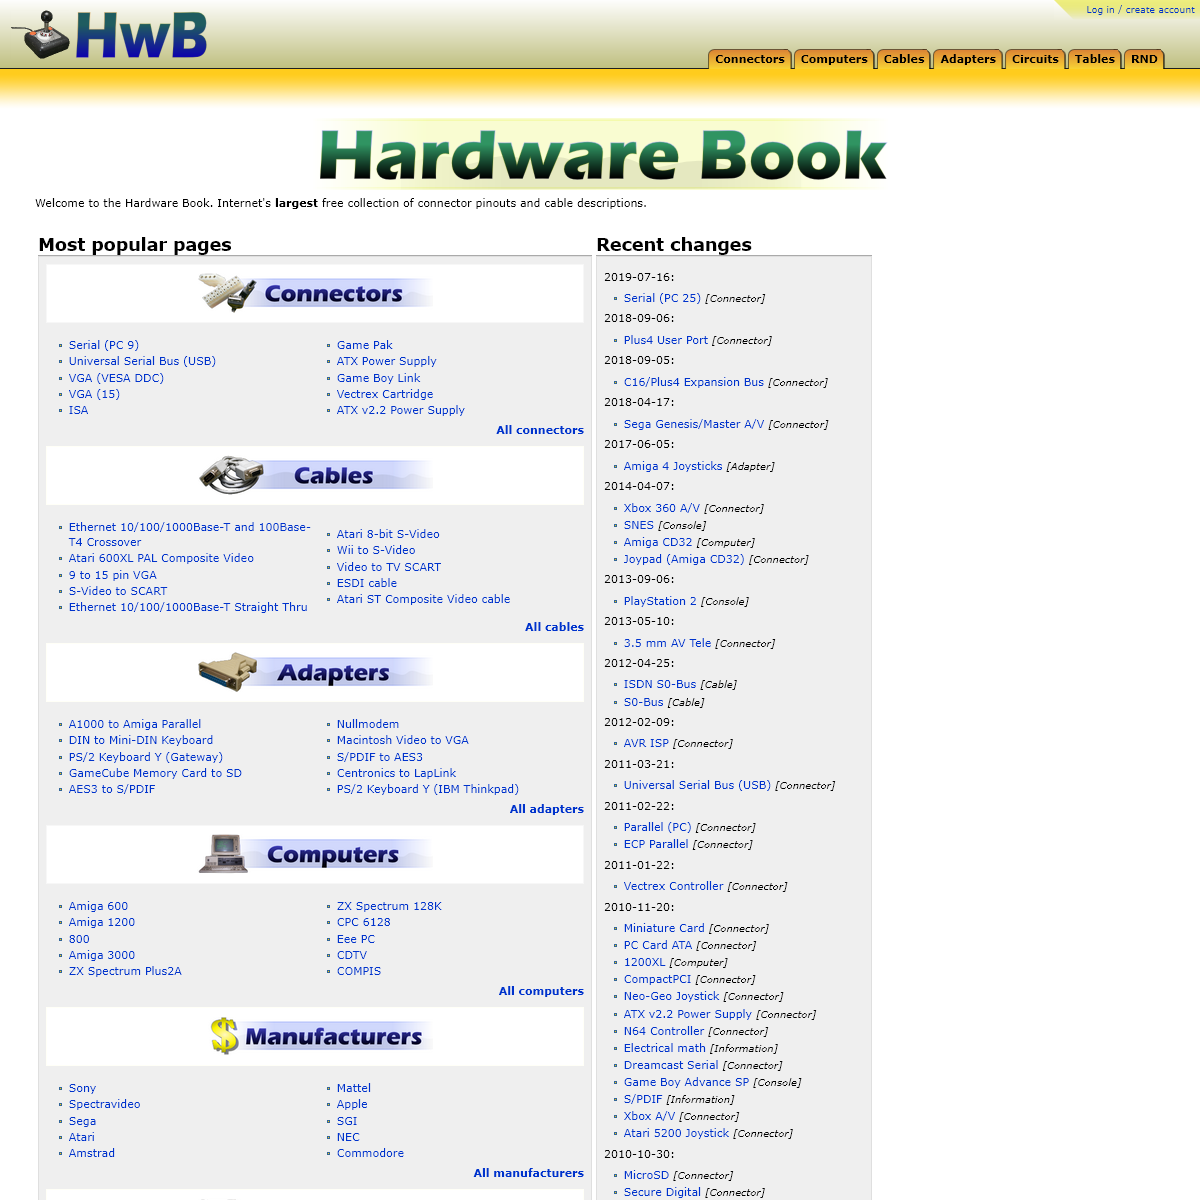 The Hardware Book - HwB